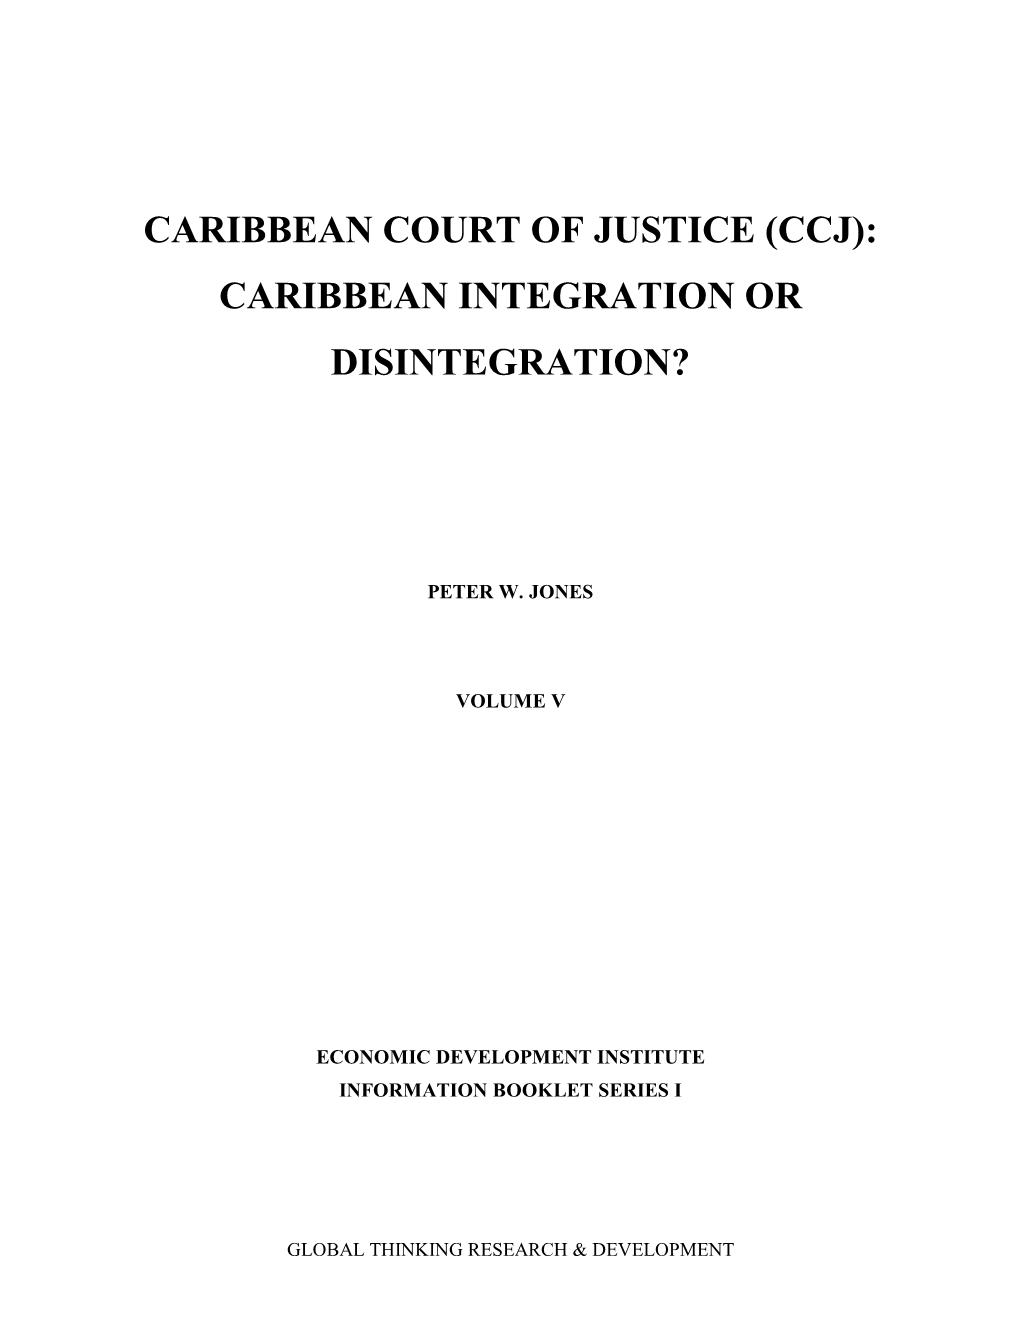 Caribbean Court of Justice (Ccj): Caribbean Integration Or Disintegration?